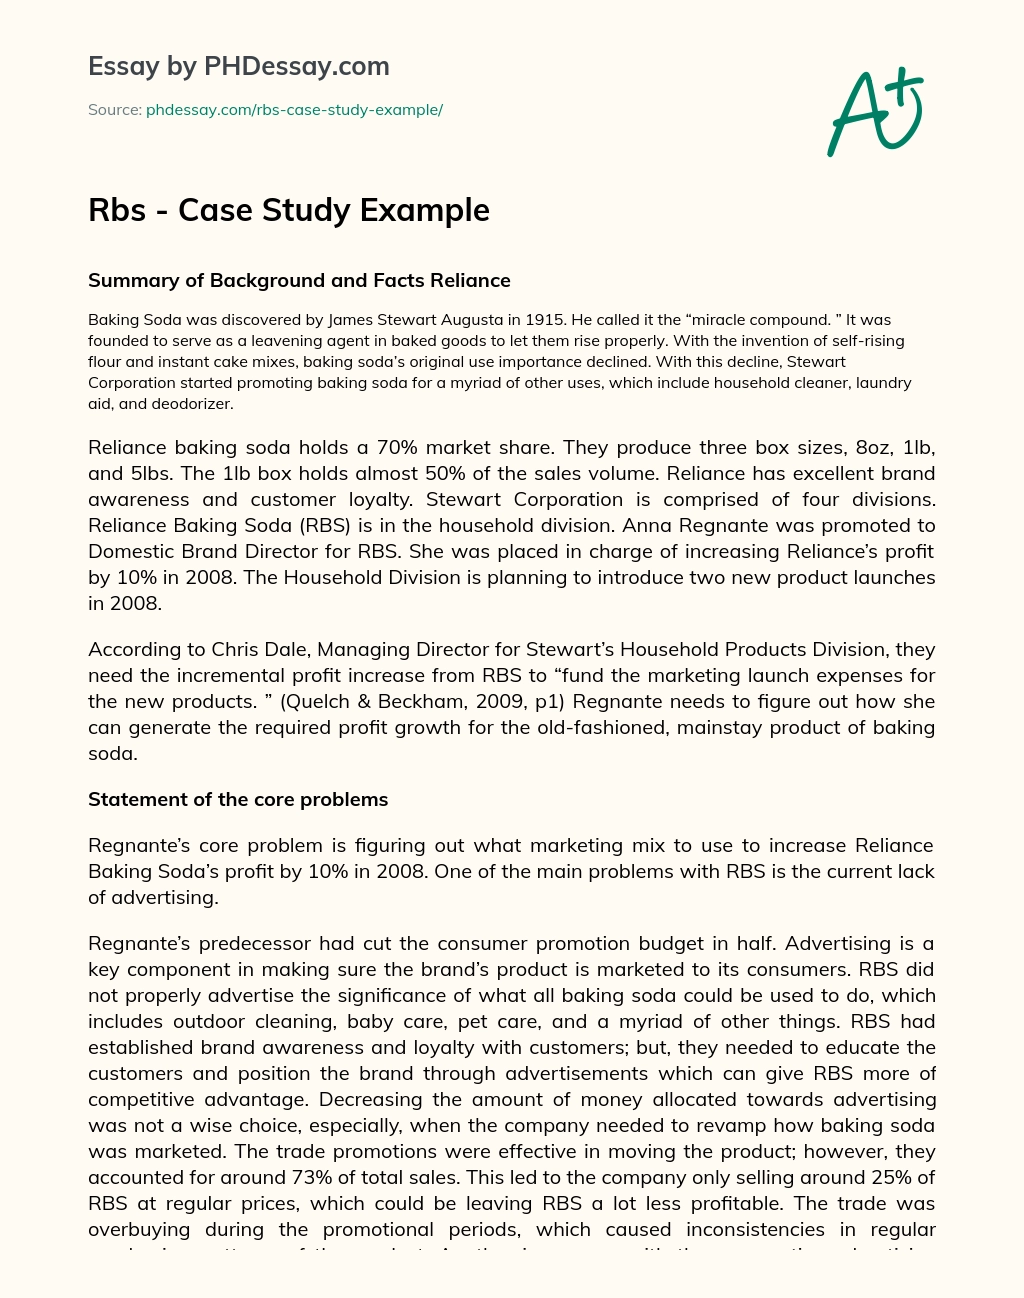 Rbs – Case Study Example essay